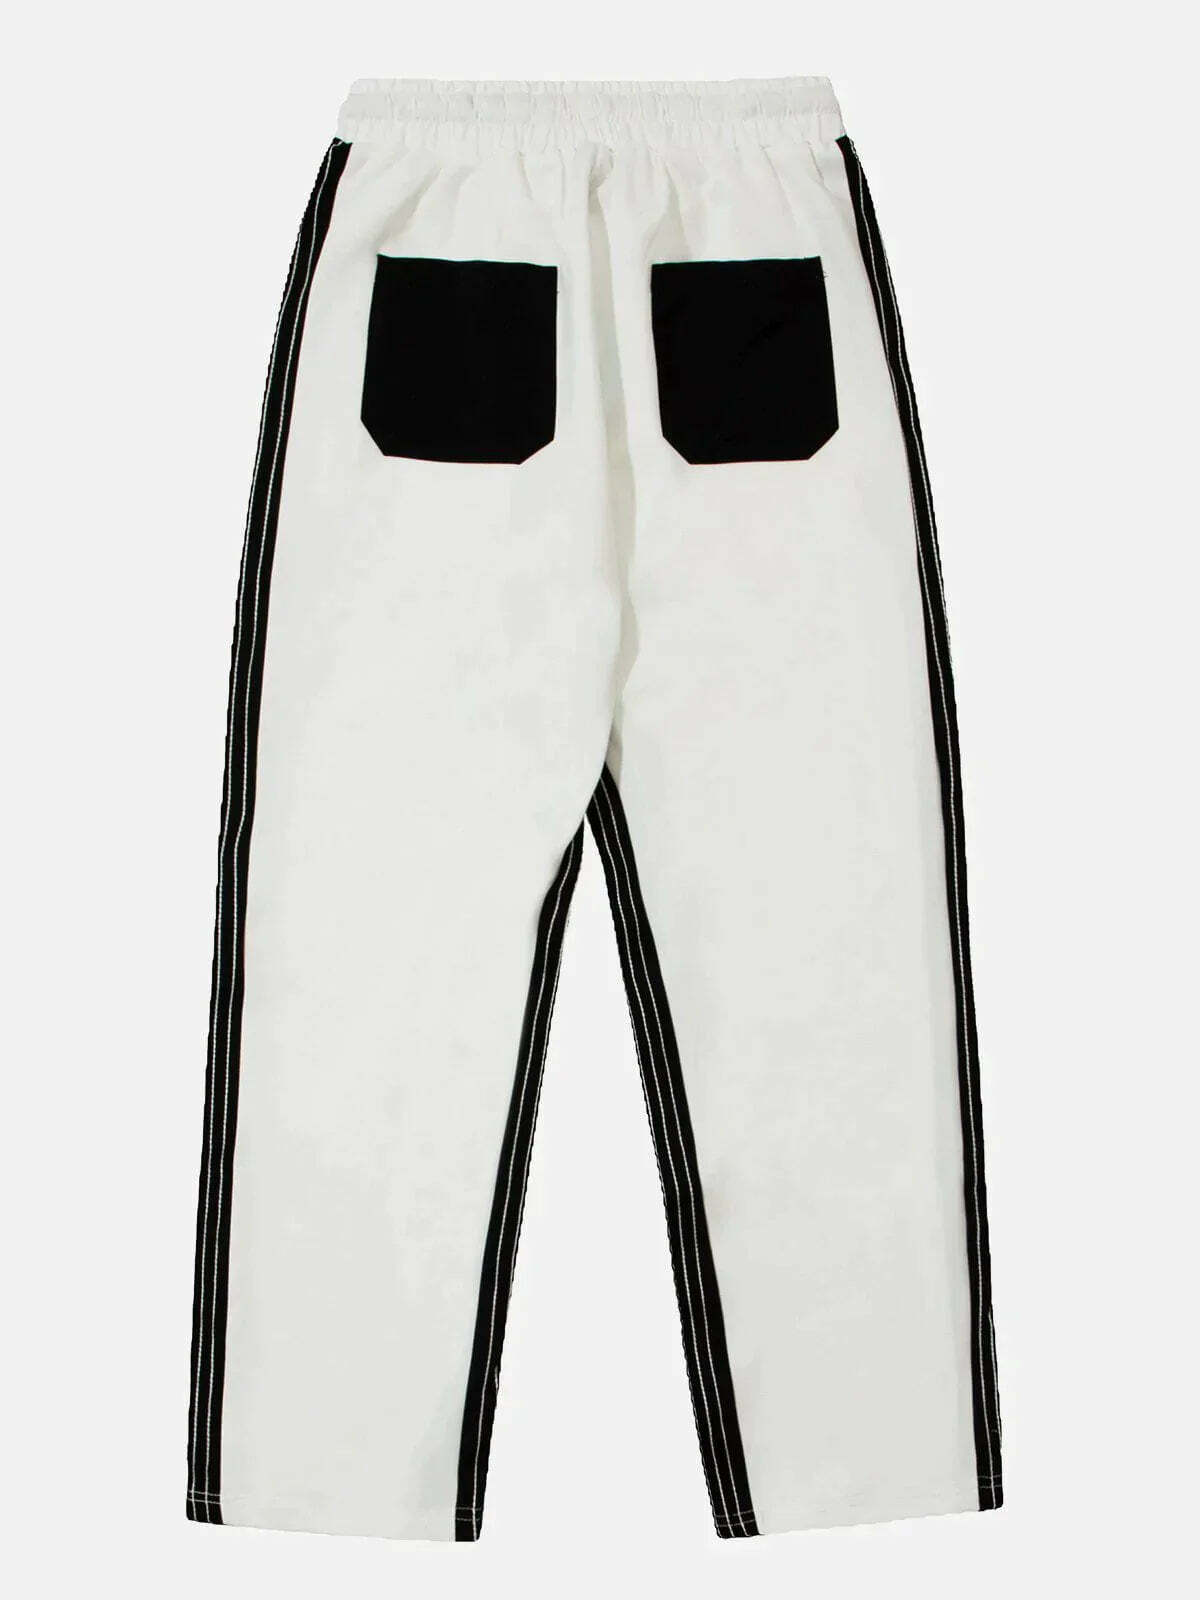 colorblock drawstring pants edgy streetwear essential 7051